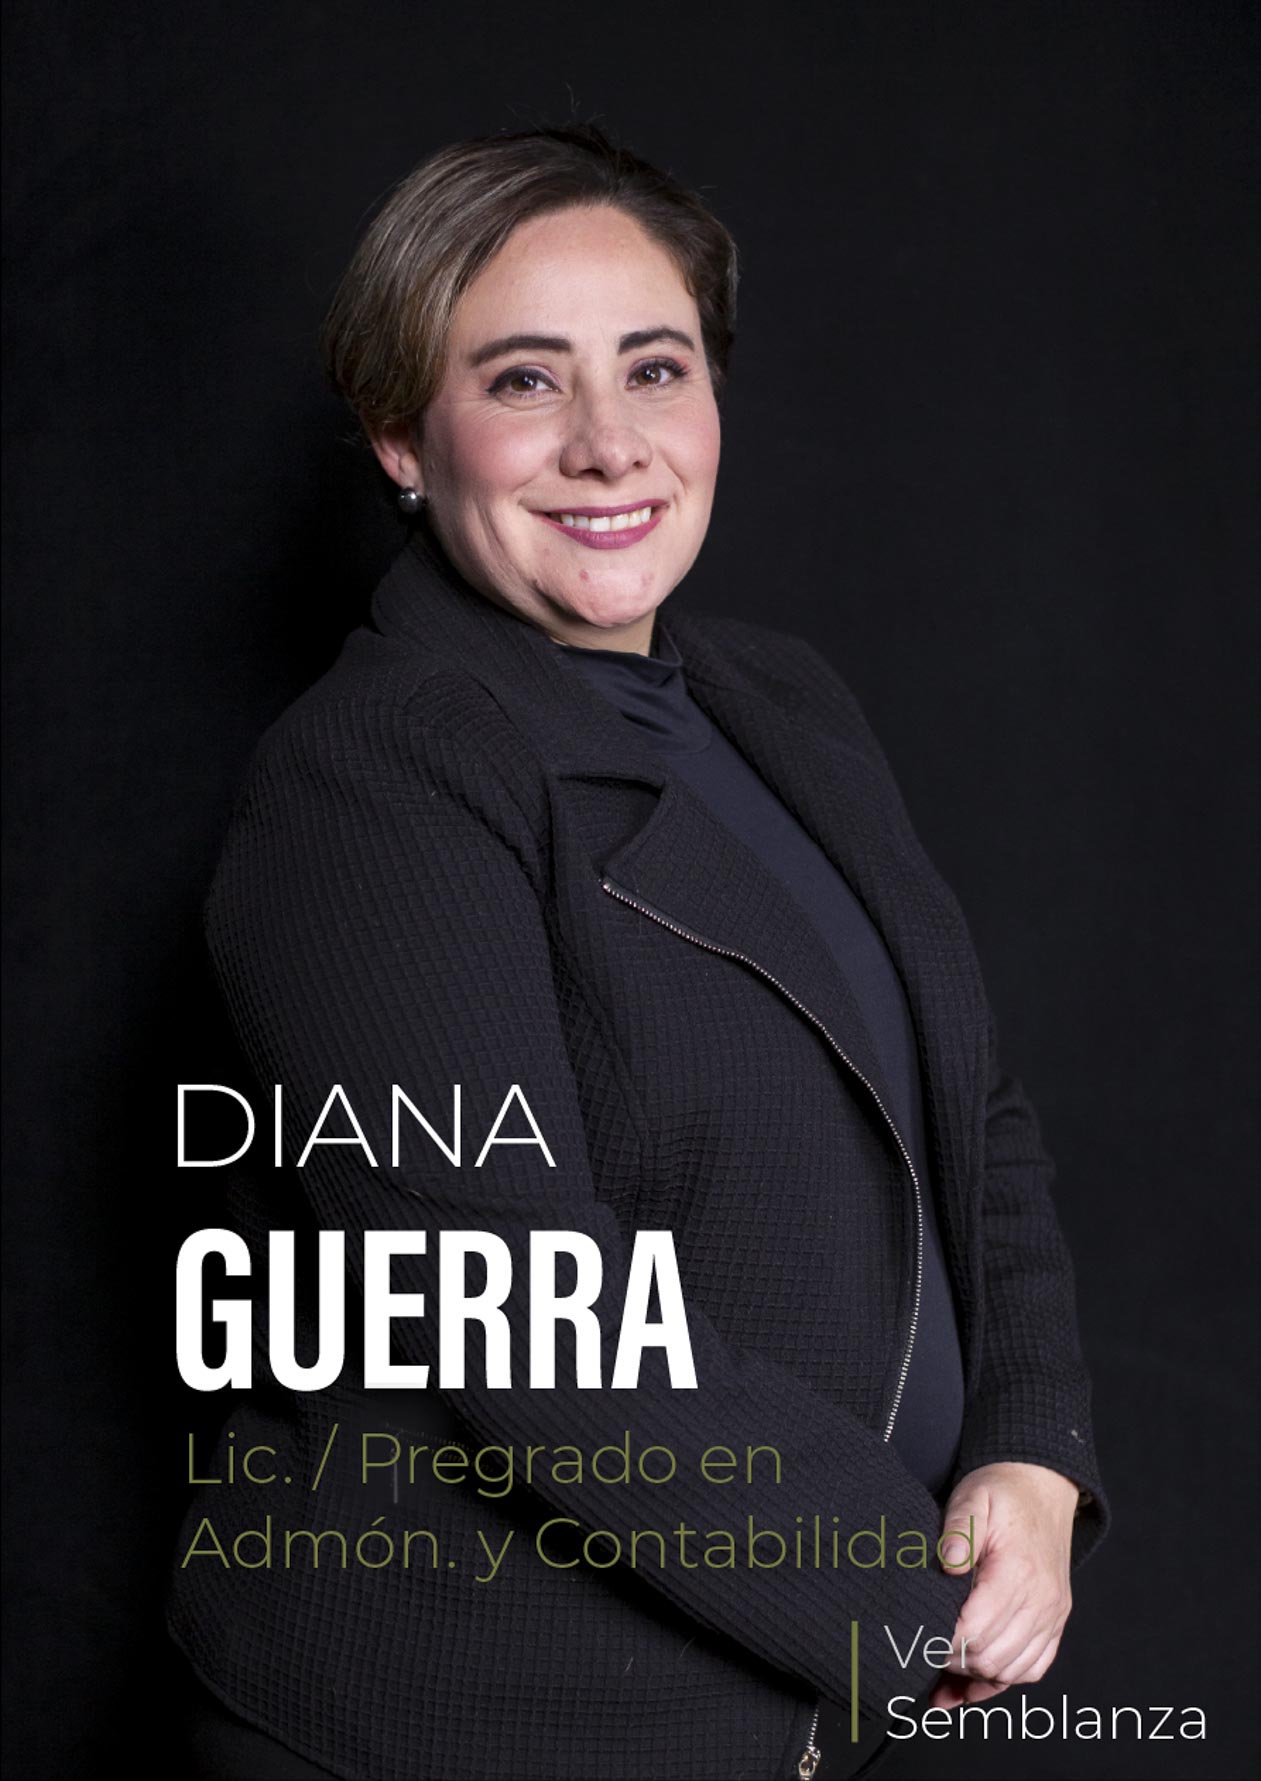 Diana Guerra